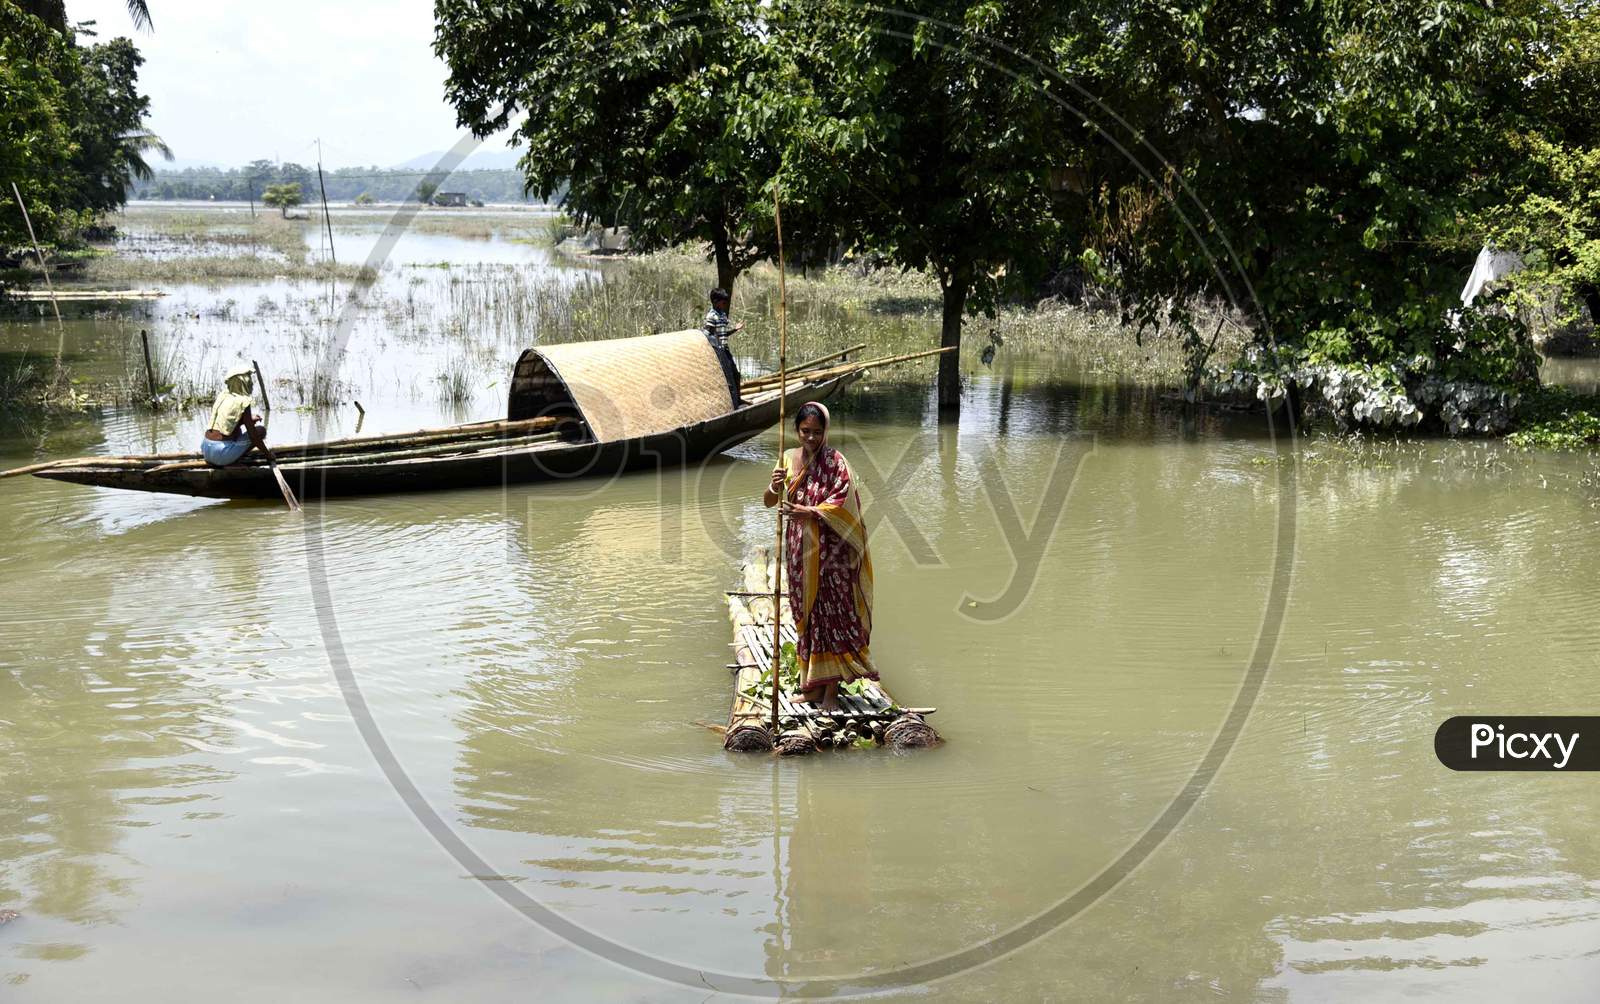 A woman cross a flooded area on a make-shift raft,